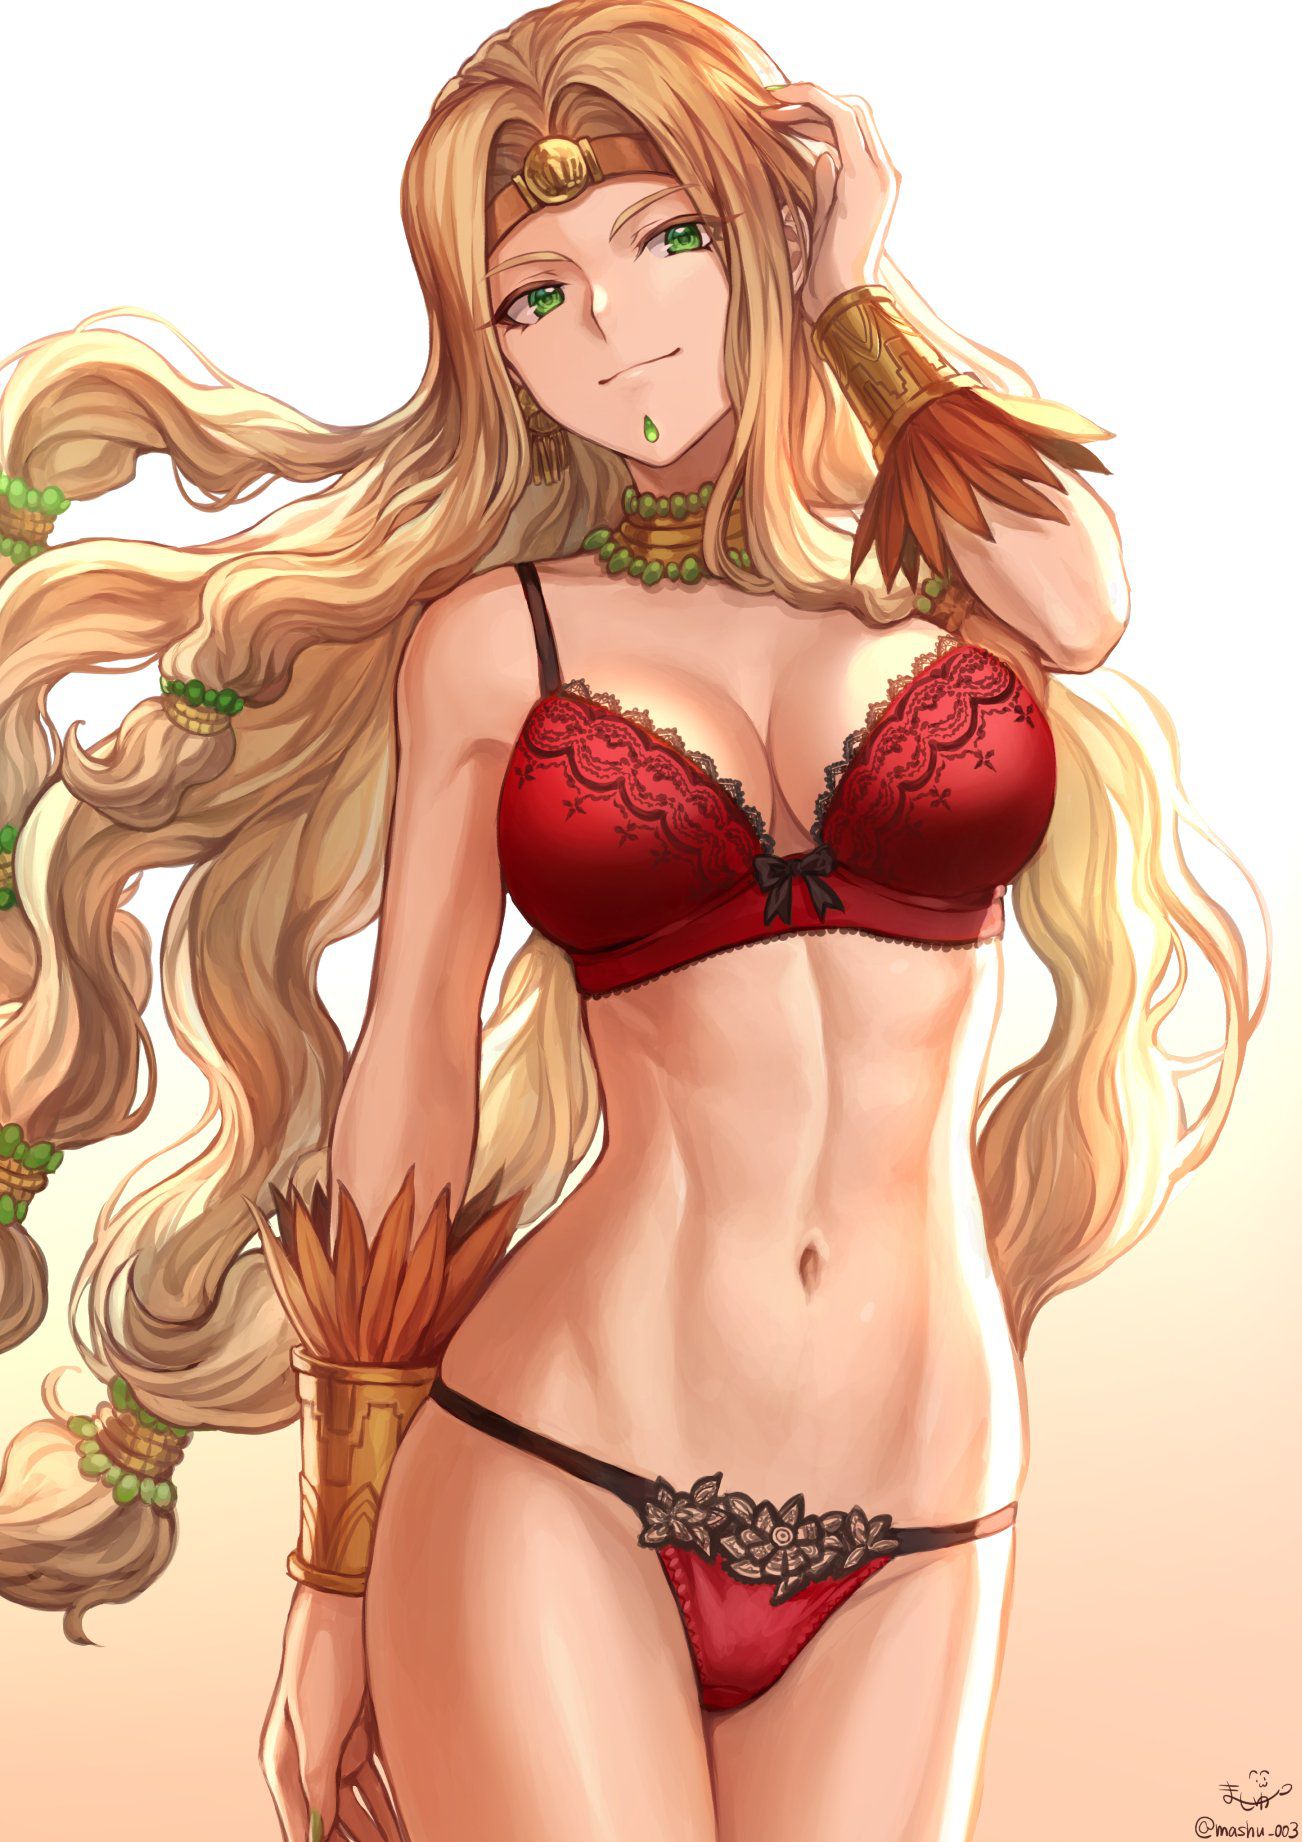 Erotic anime summary erotic images of beautiful girls wearing erotic underwear [50 pieces] 38